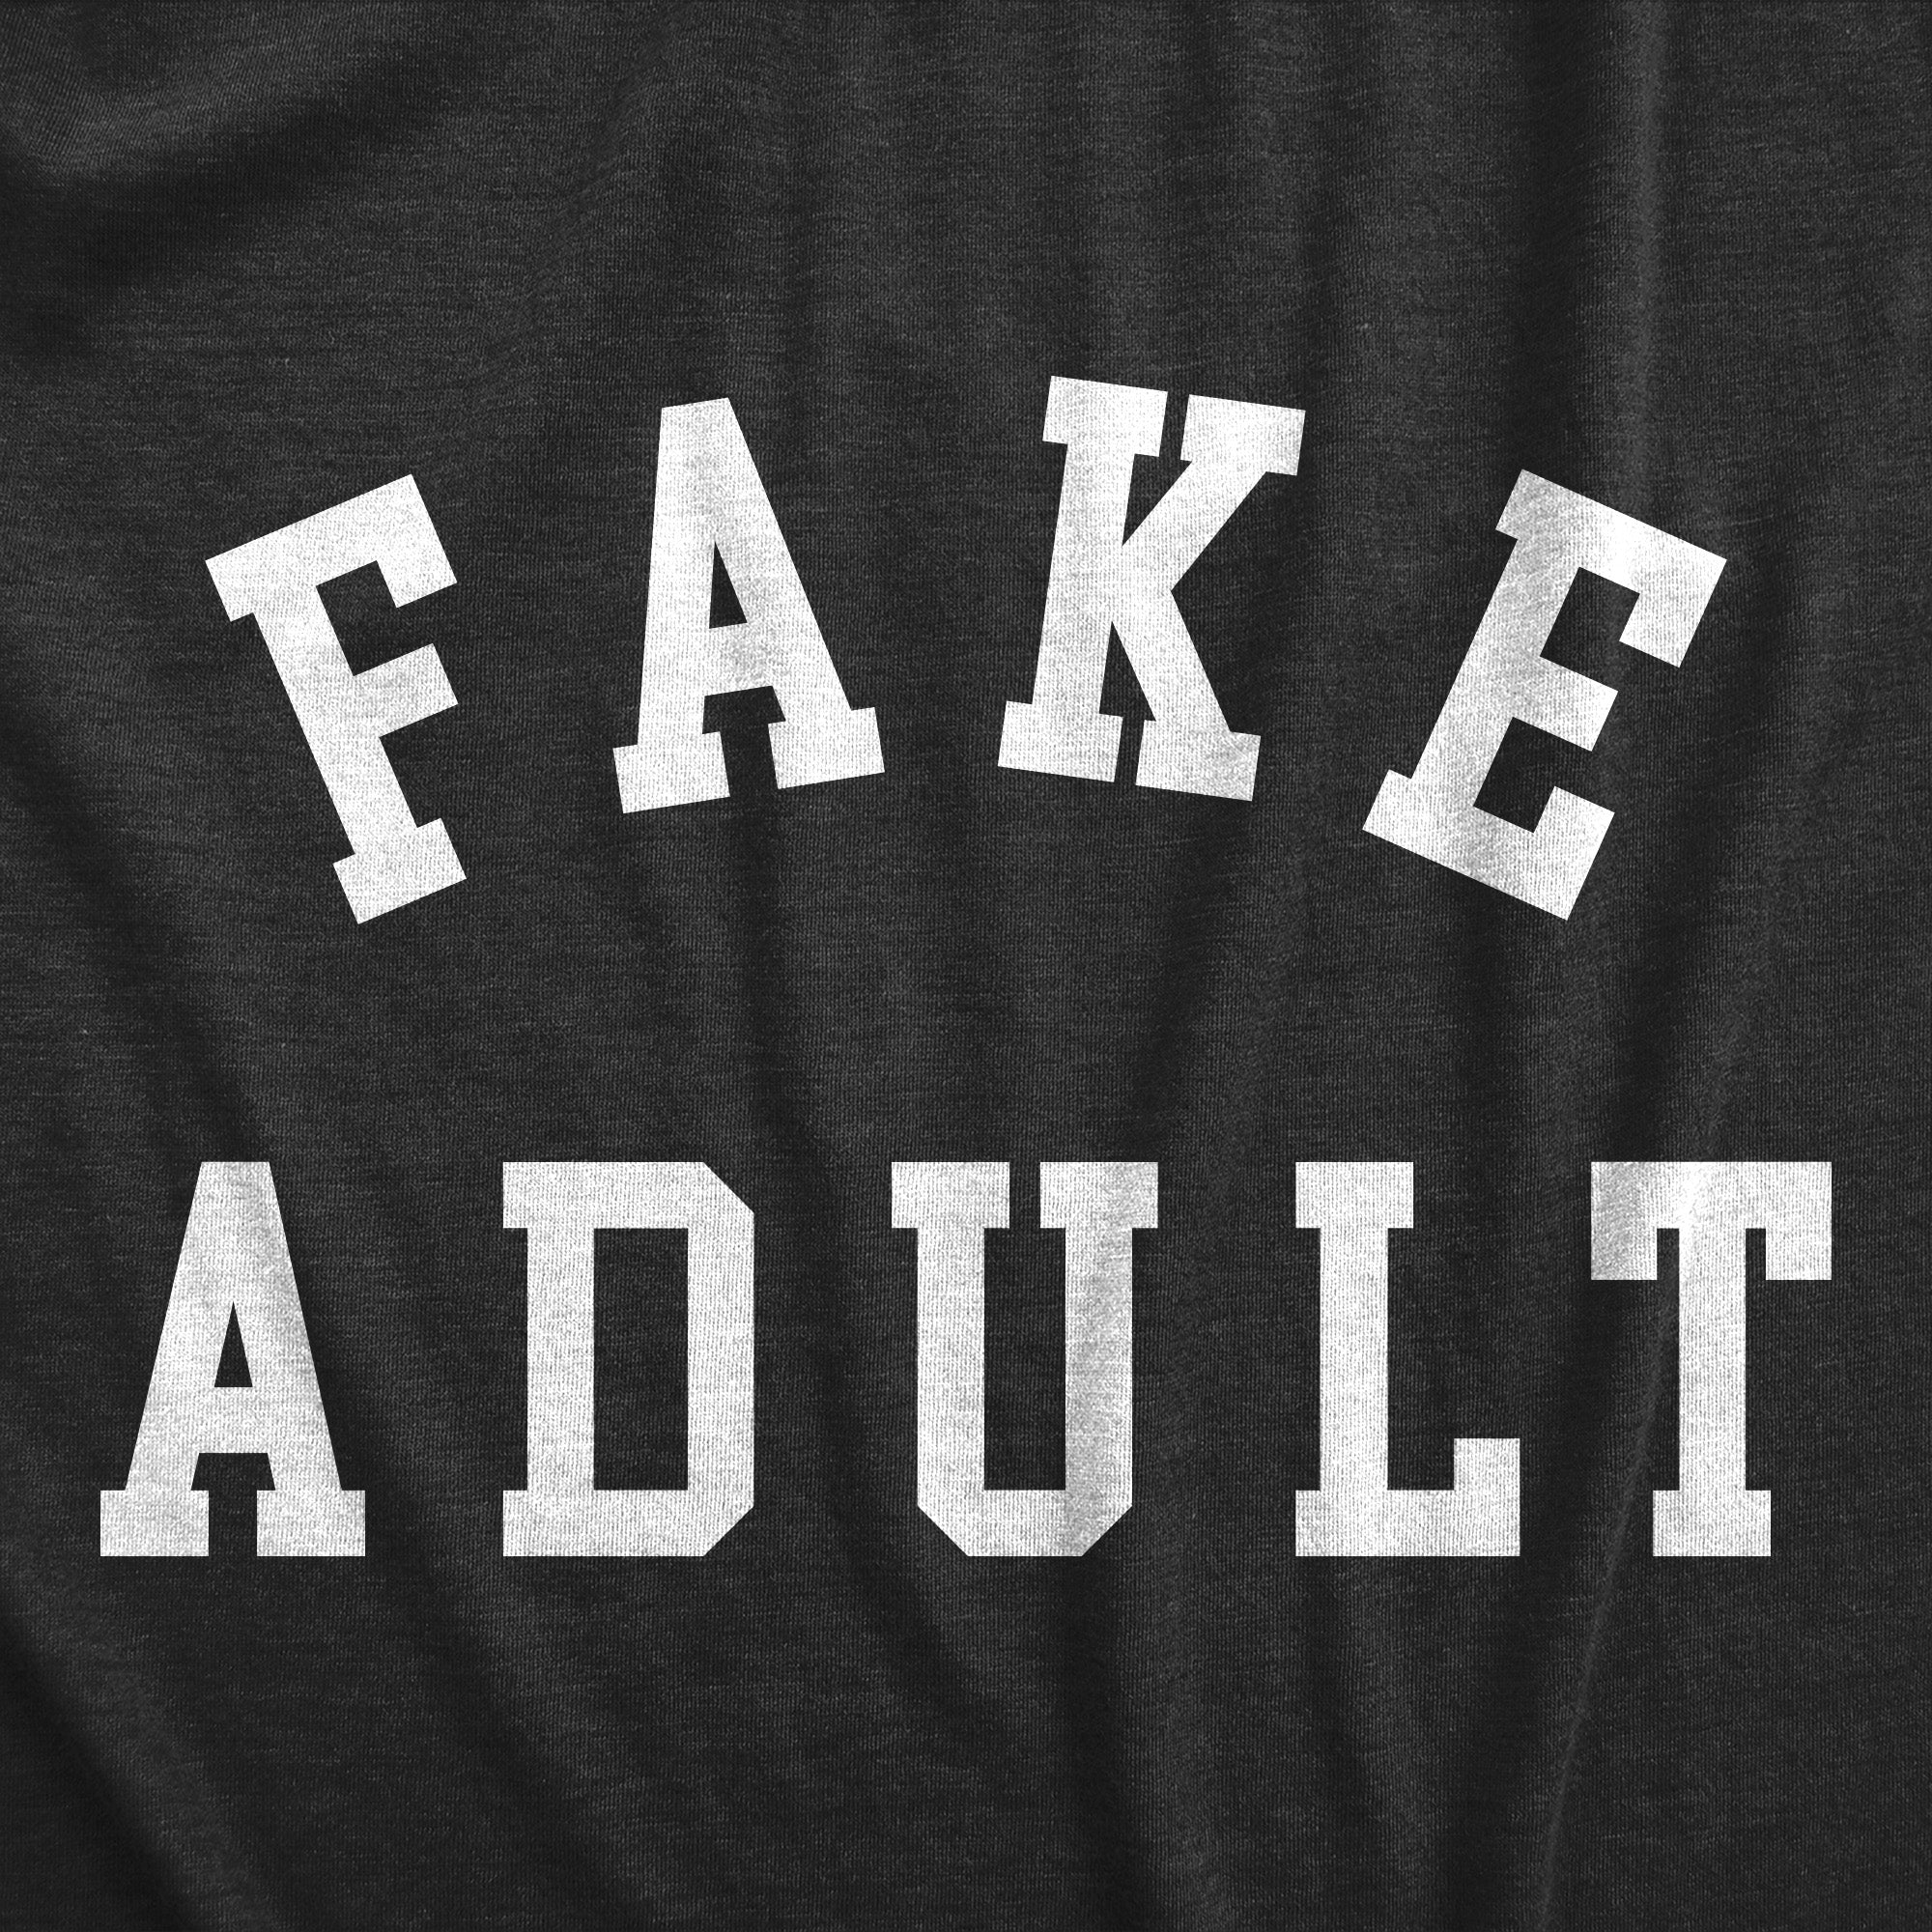 Funny Heather Black - Fake Adult Fake Adult Mens T Shirt Nerdy Sarcastic Tee